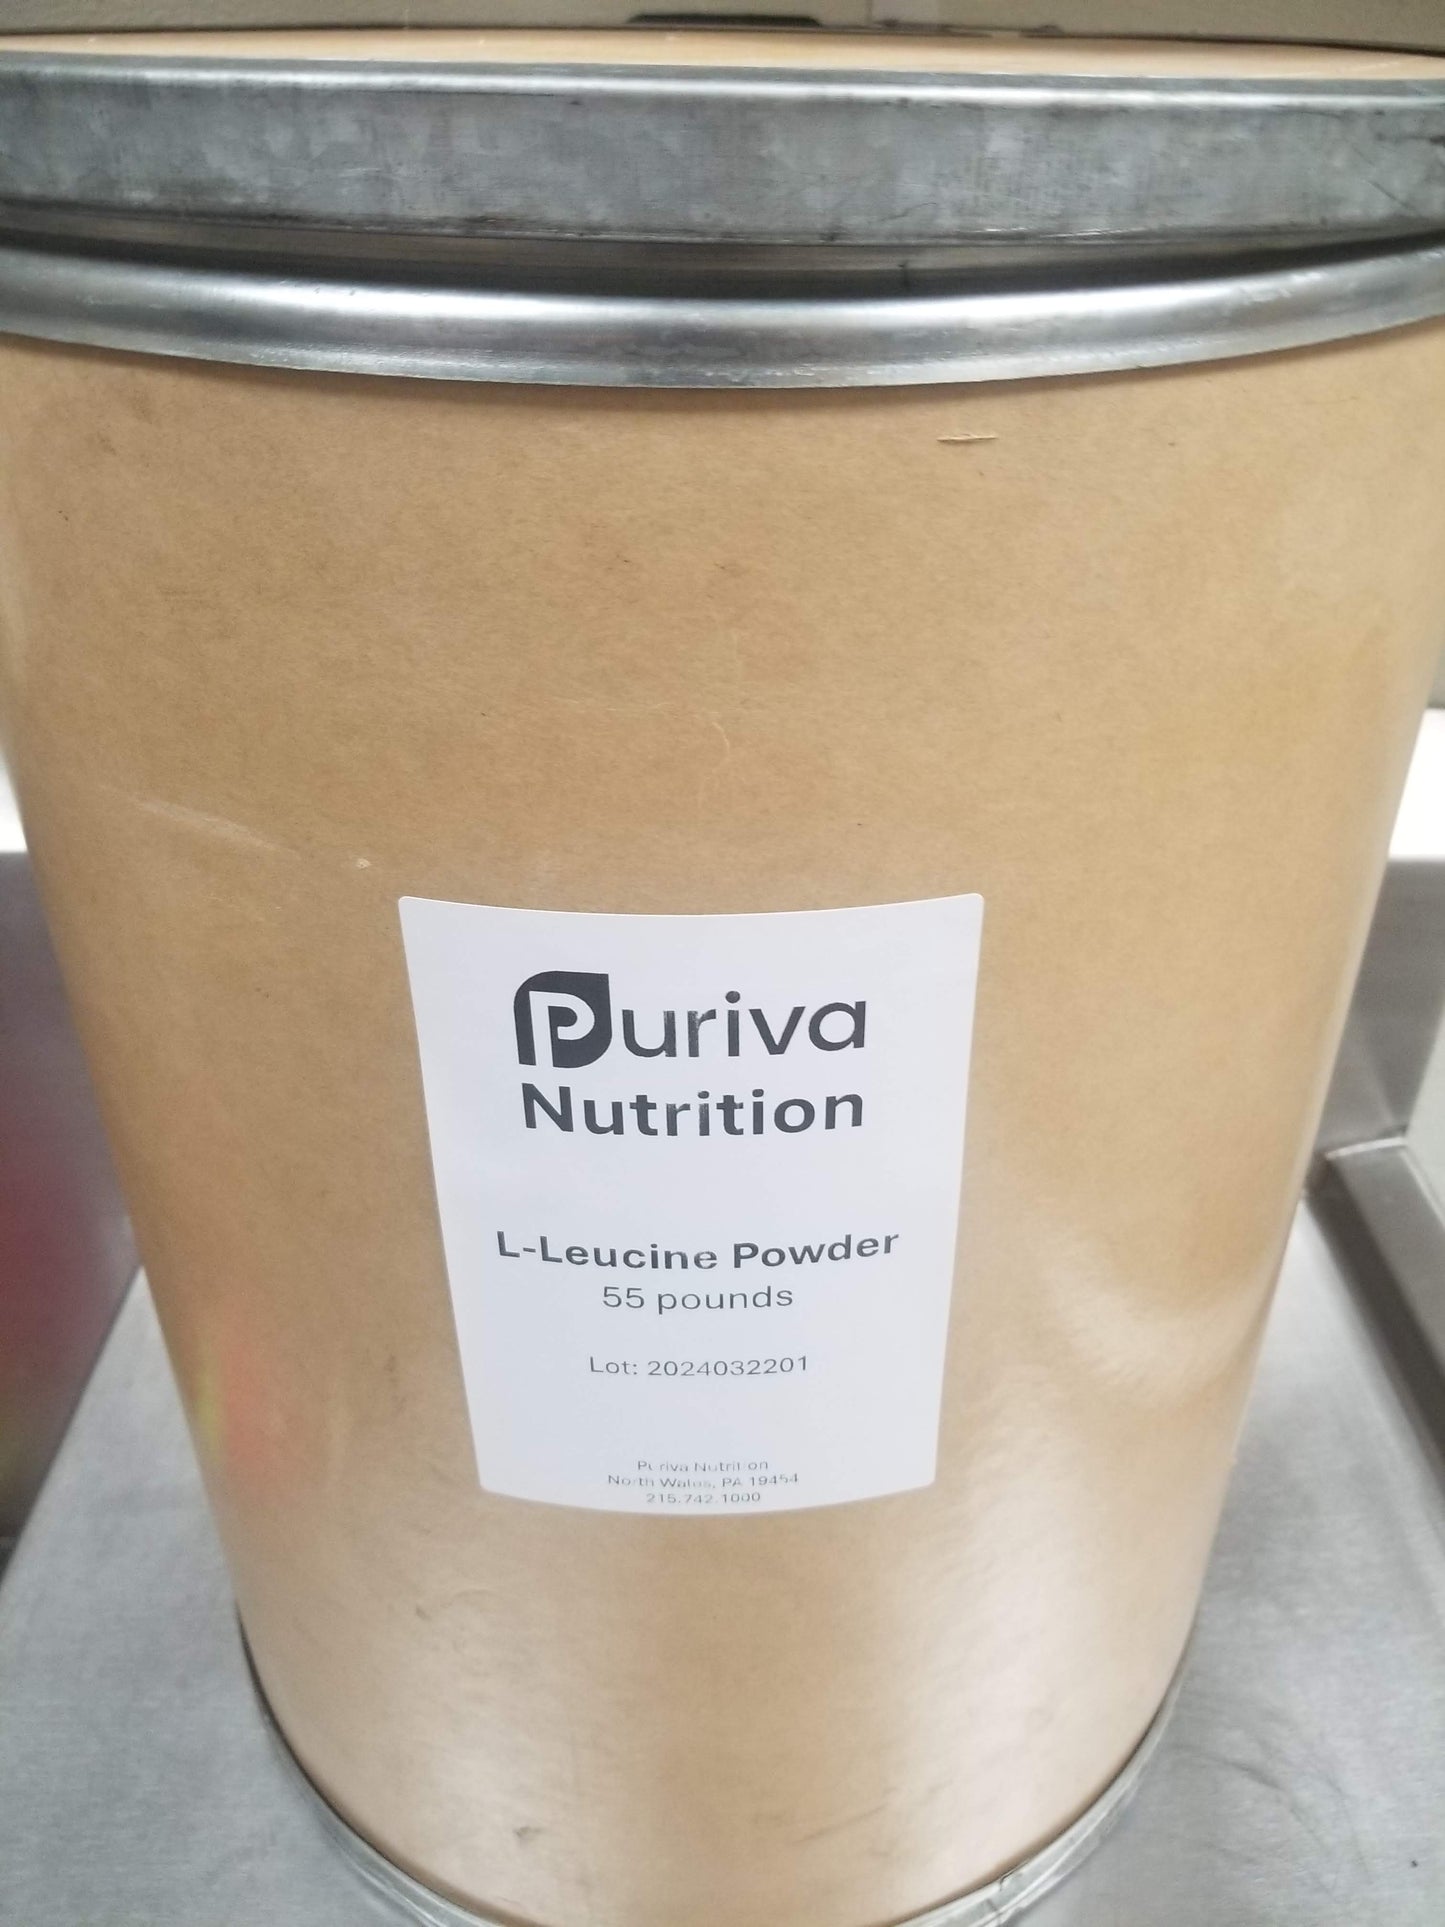 L-Leucine powder, 1 pound, by Puriva Nutrition